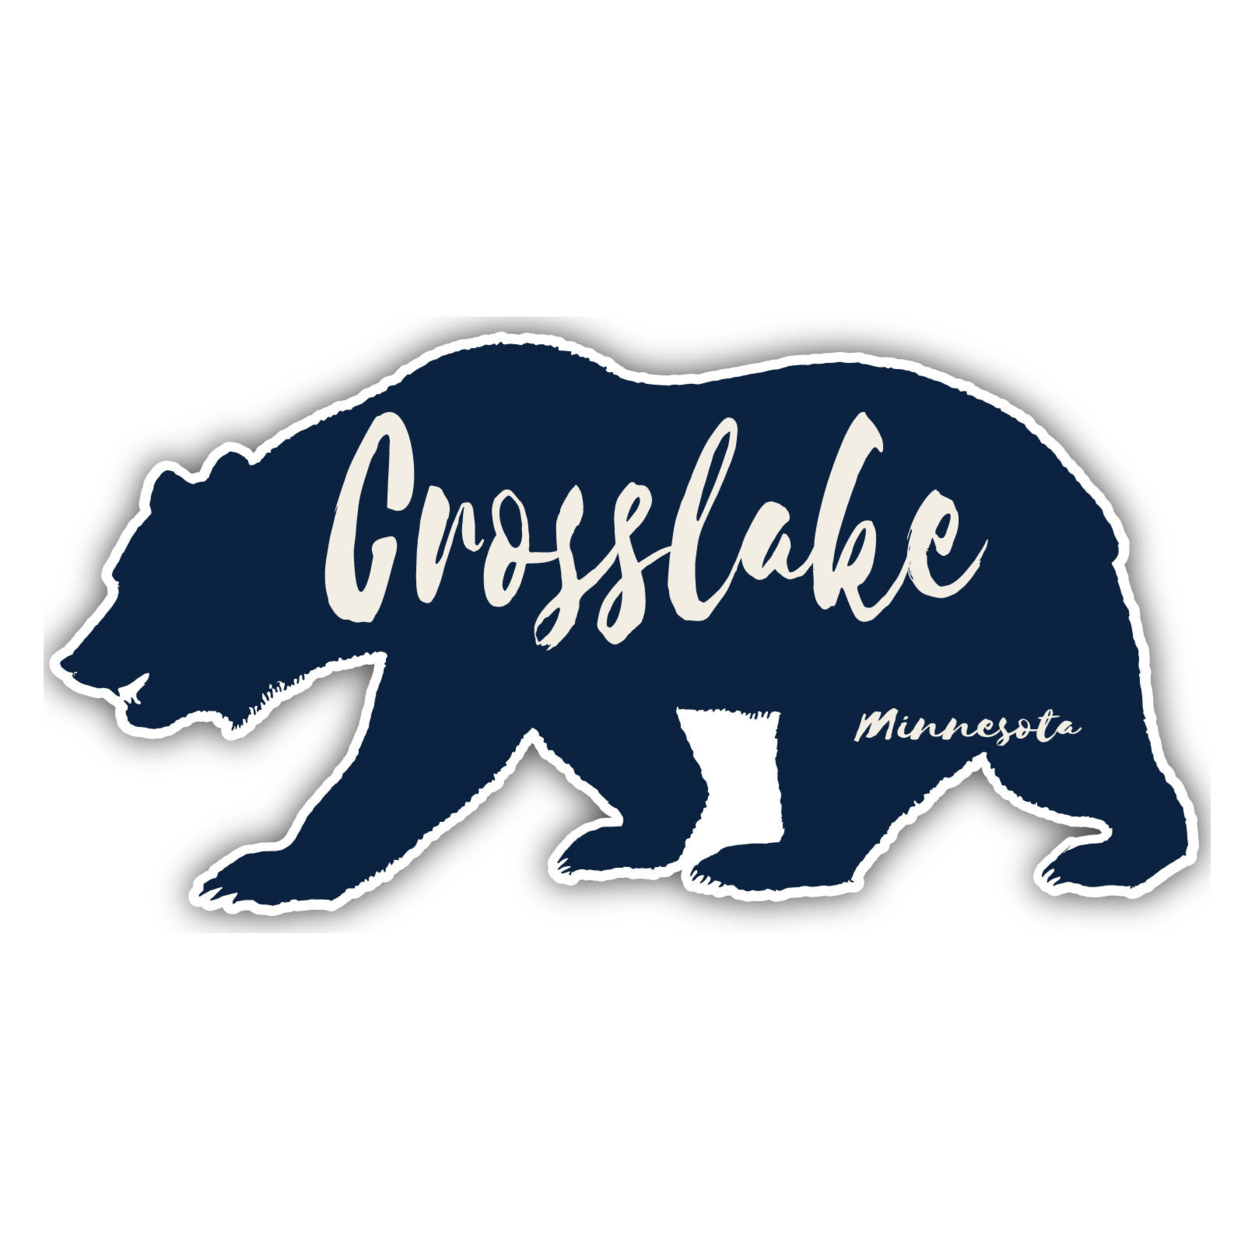 Crosslake Minnesota Souvenir Decorative Stickers (Choose Theme And Size) - Single Unit, 12-Inch, Bear